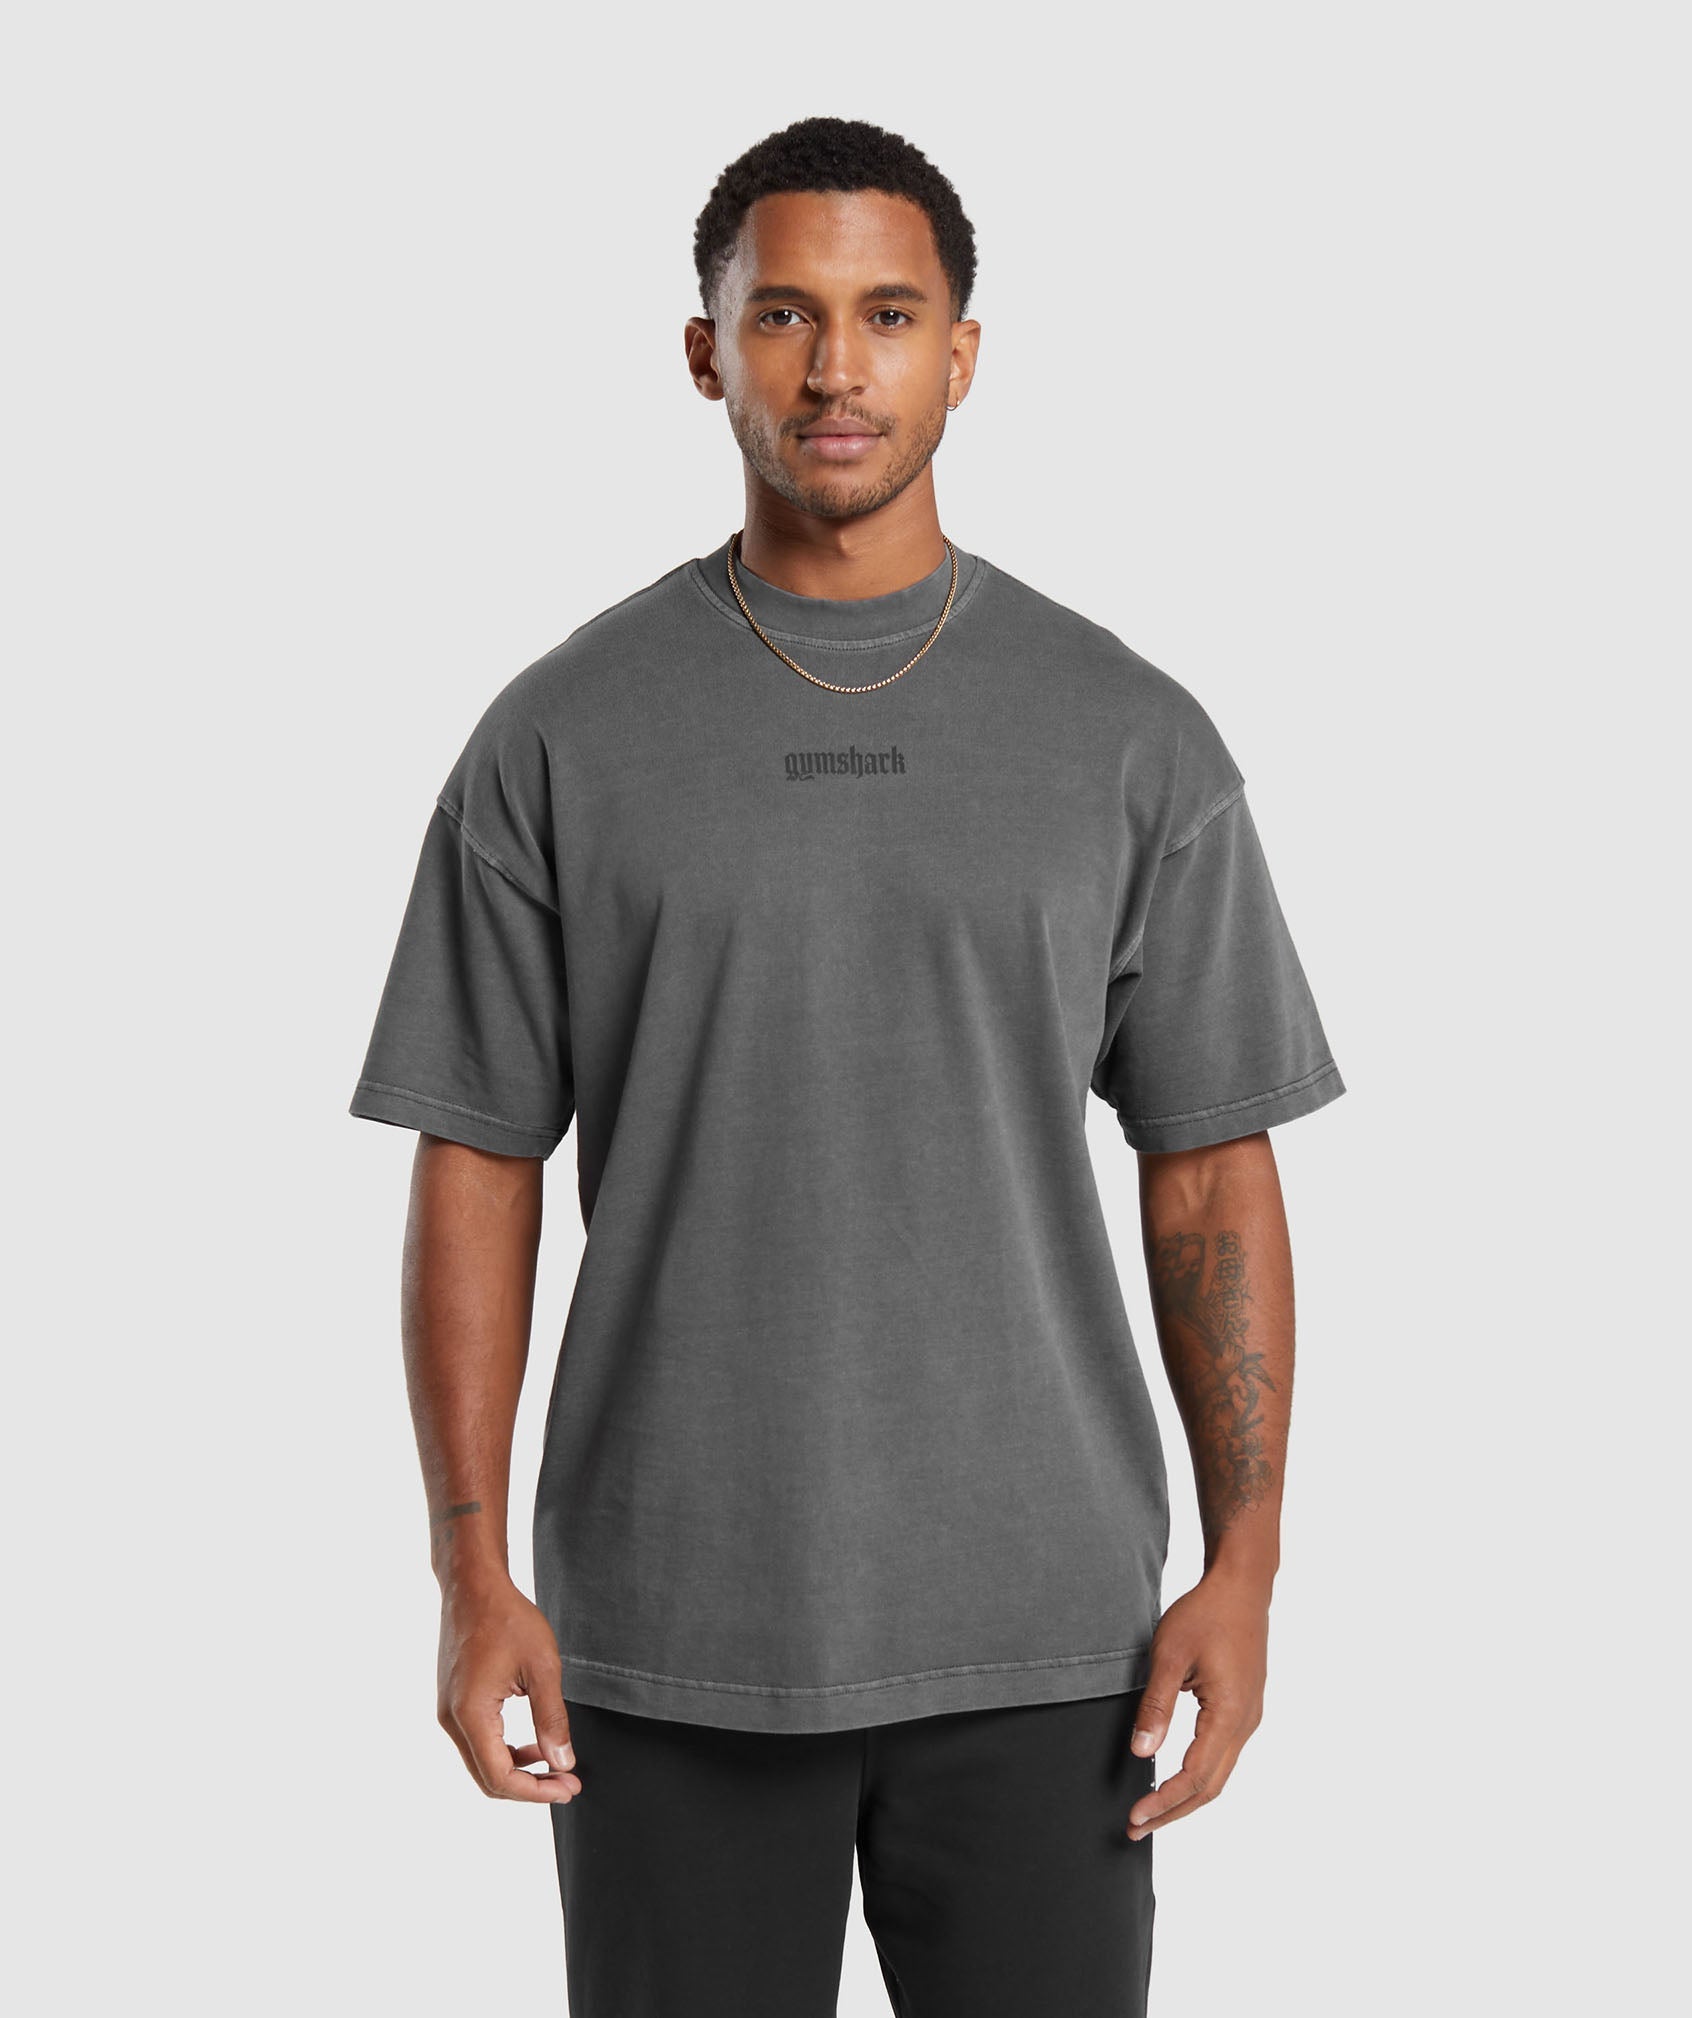 Gymshark Essential Oversized T-Shirt - Light Grey